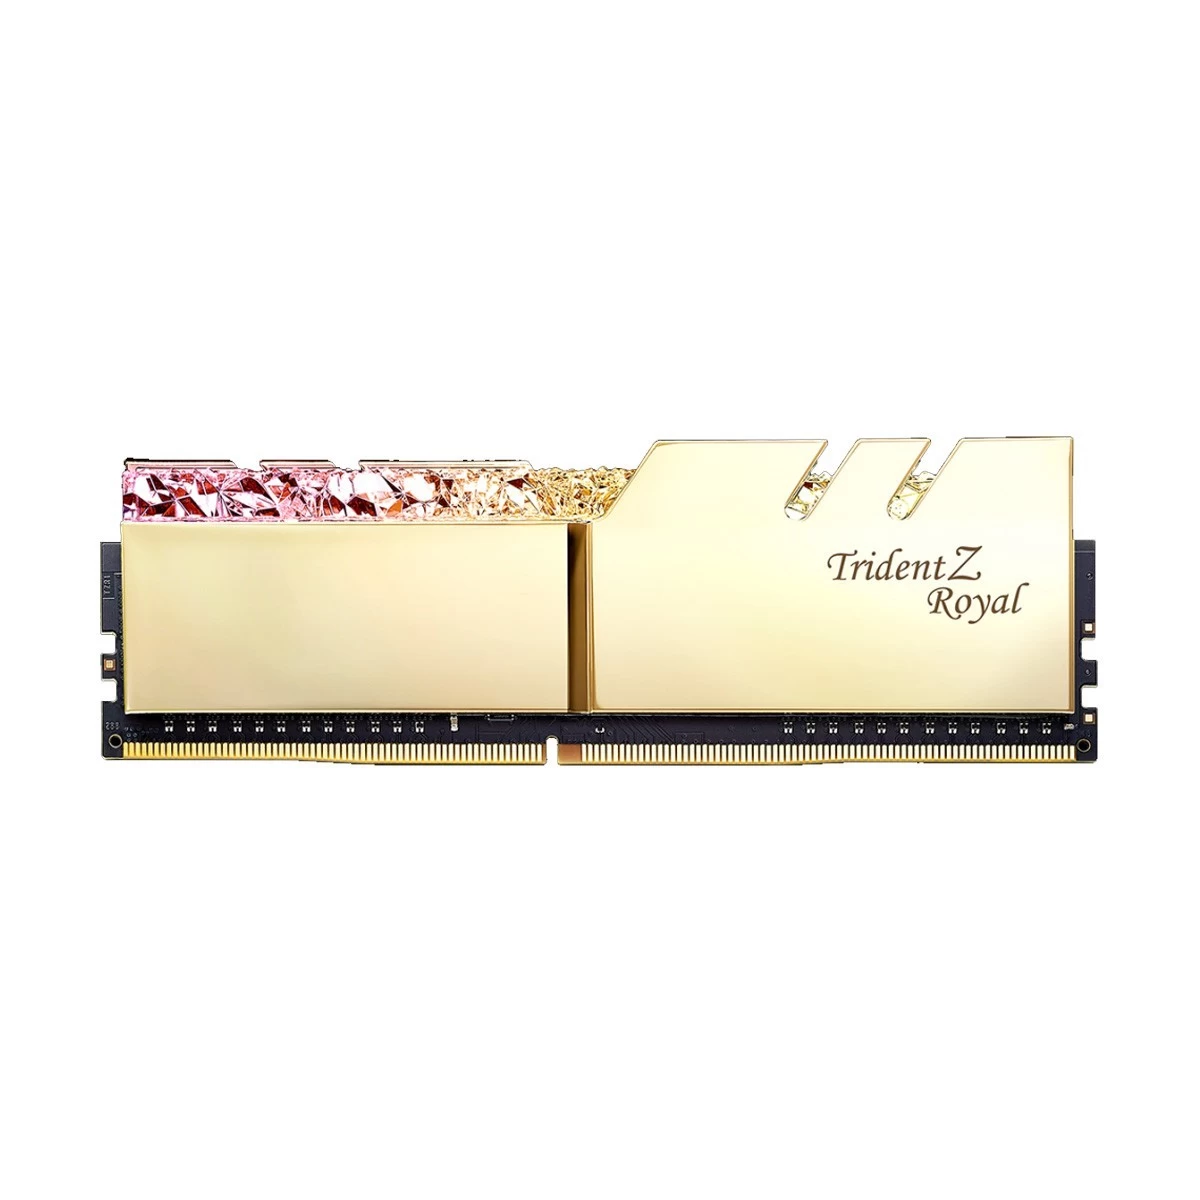 G.Skill Trident Z Royal RGB 8GB DDR4 3200MHz Lustrous Gold Heatsink Desktop RAM #F4-3200C16D-16GTRG